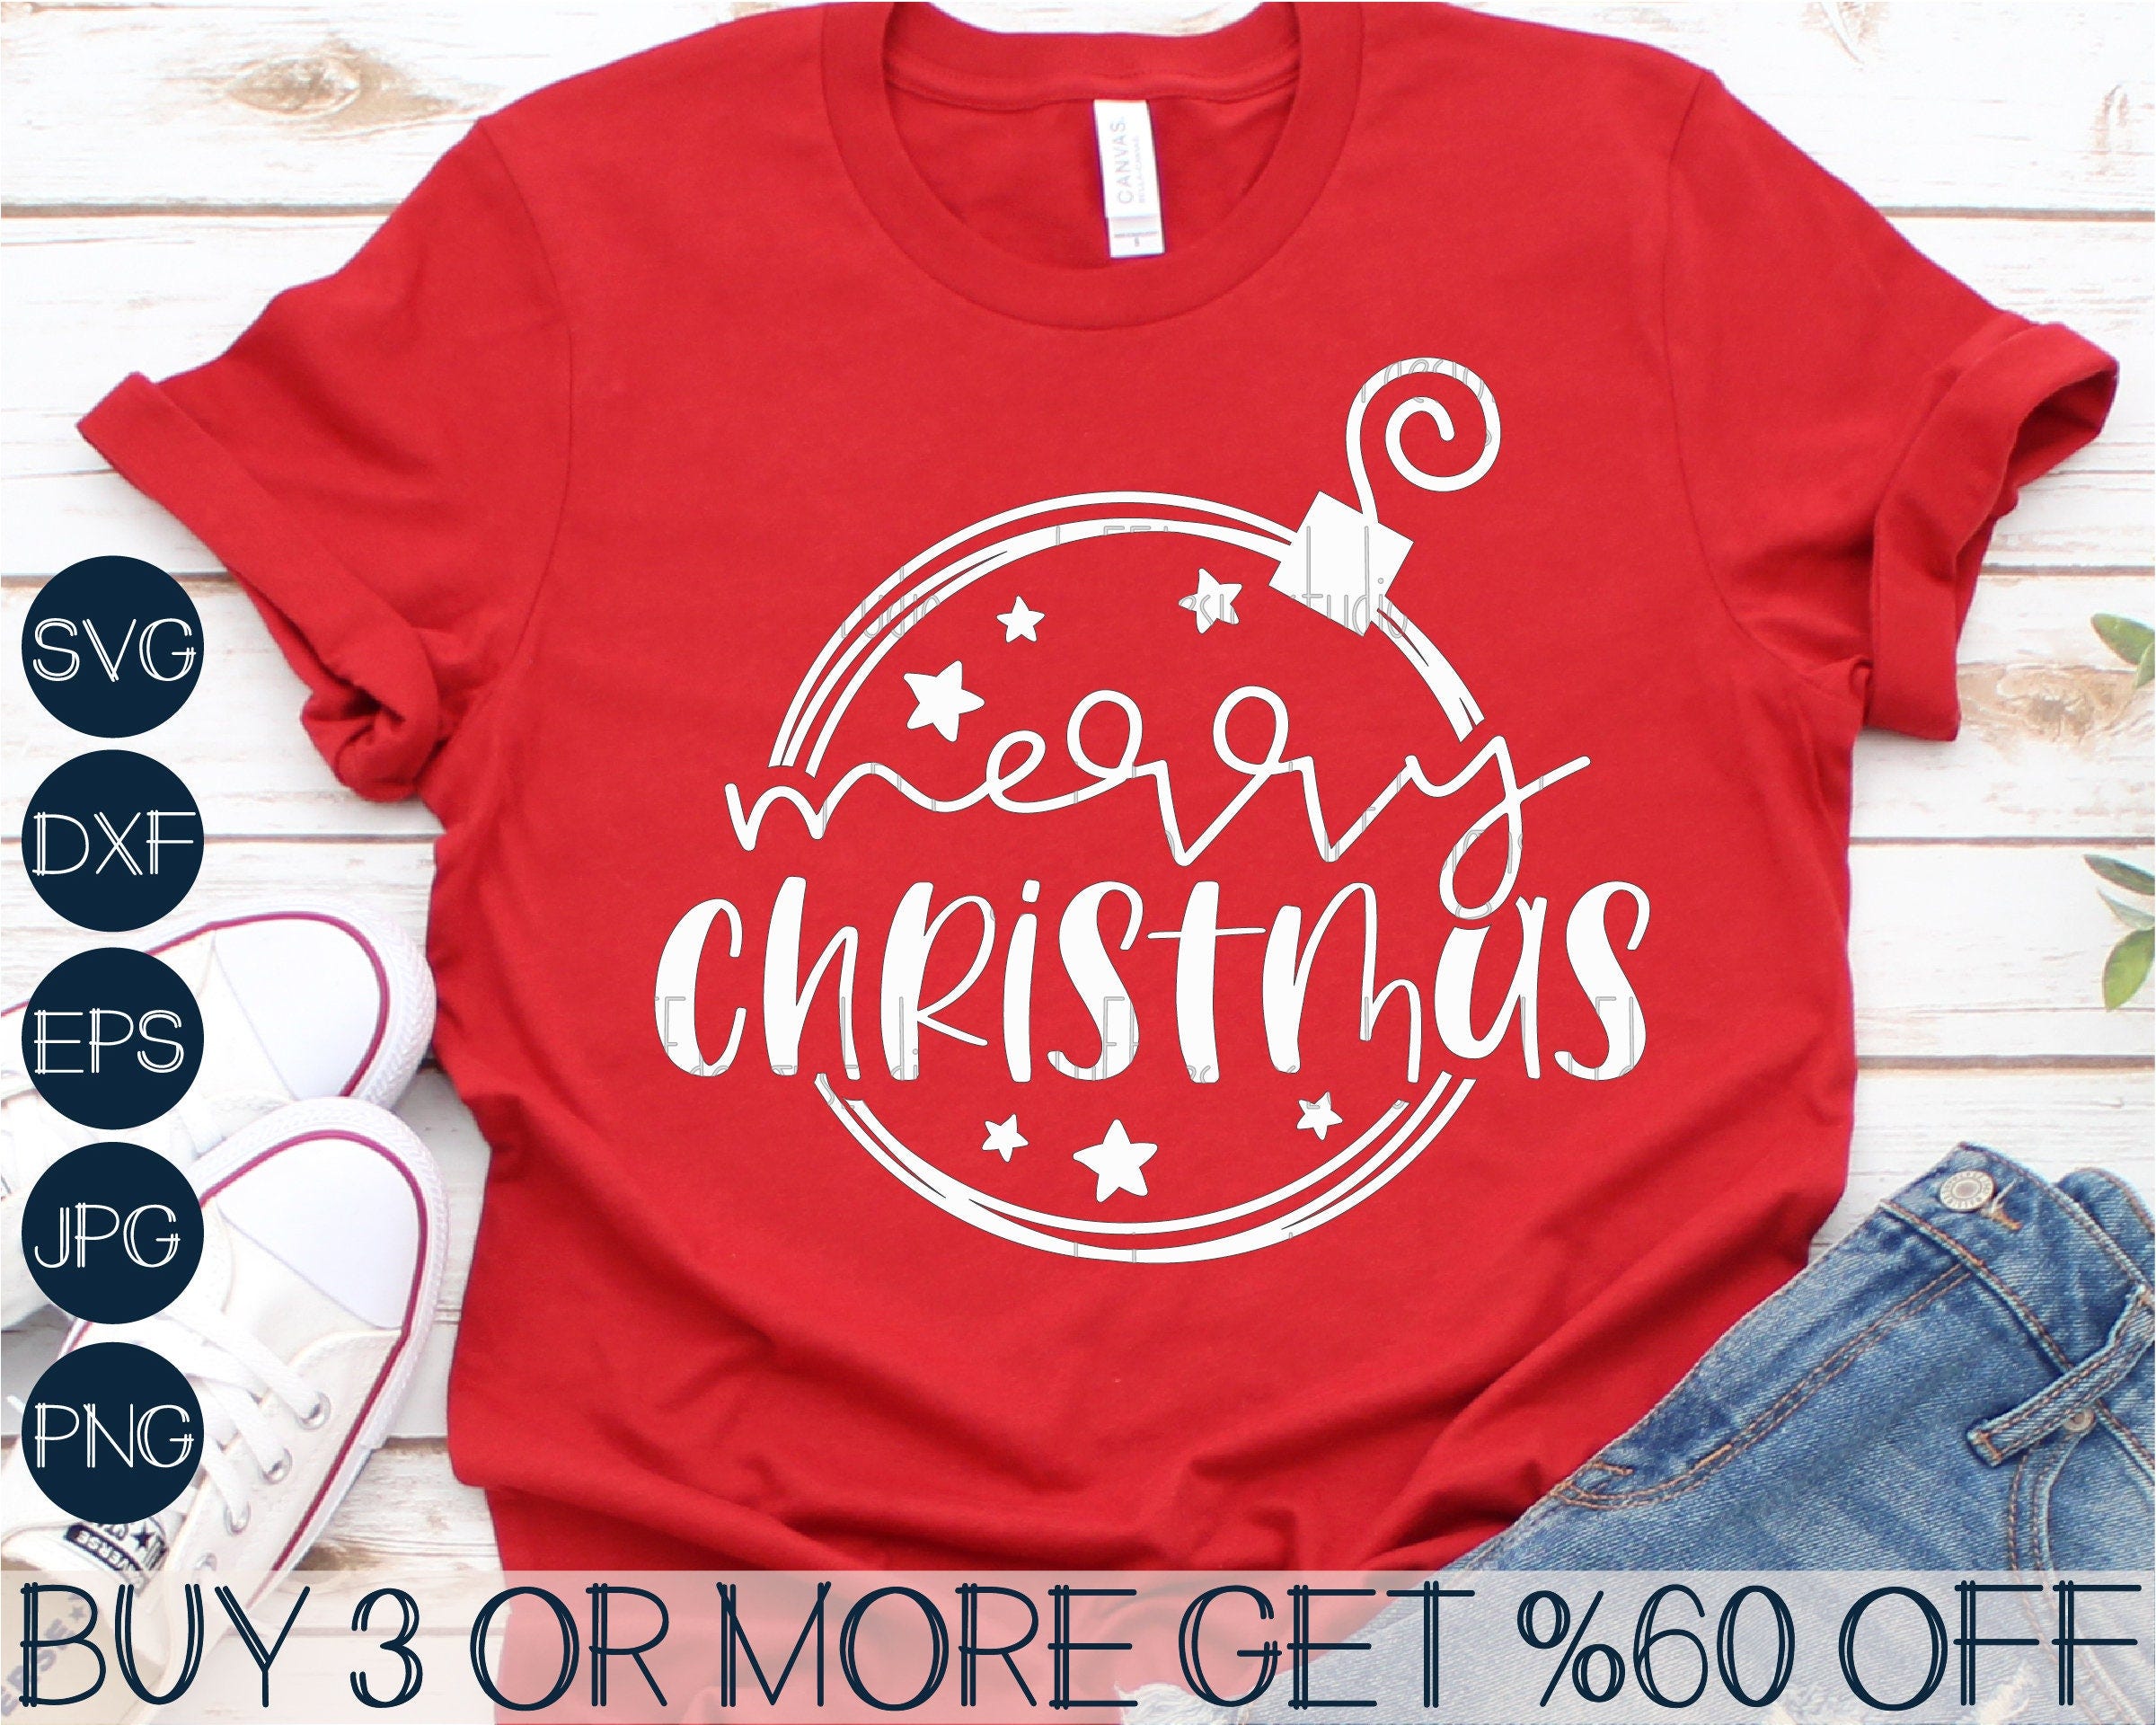 Merry Christmas SVG, Christmas Sign SVG, Christmas Shirt SVG, Christmas Ornament Svg, Png, Files For Cricut, Sublimation Designs Downloads